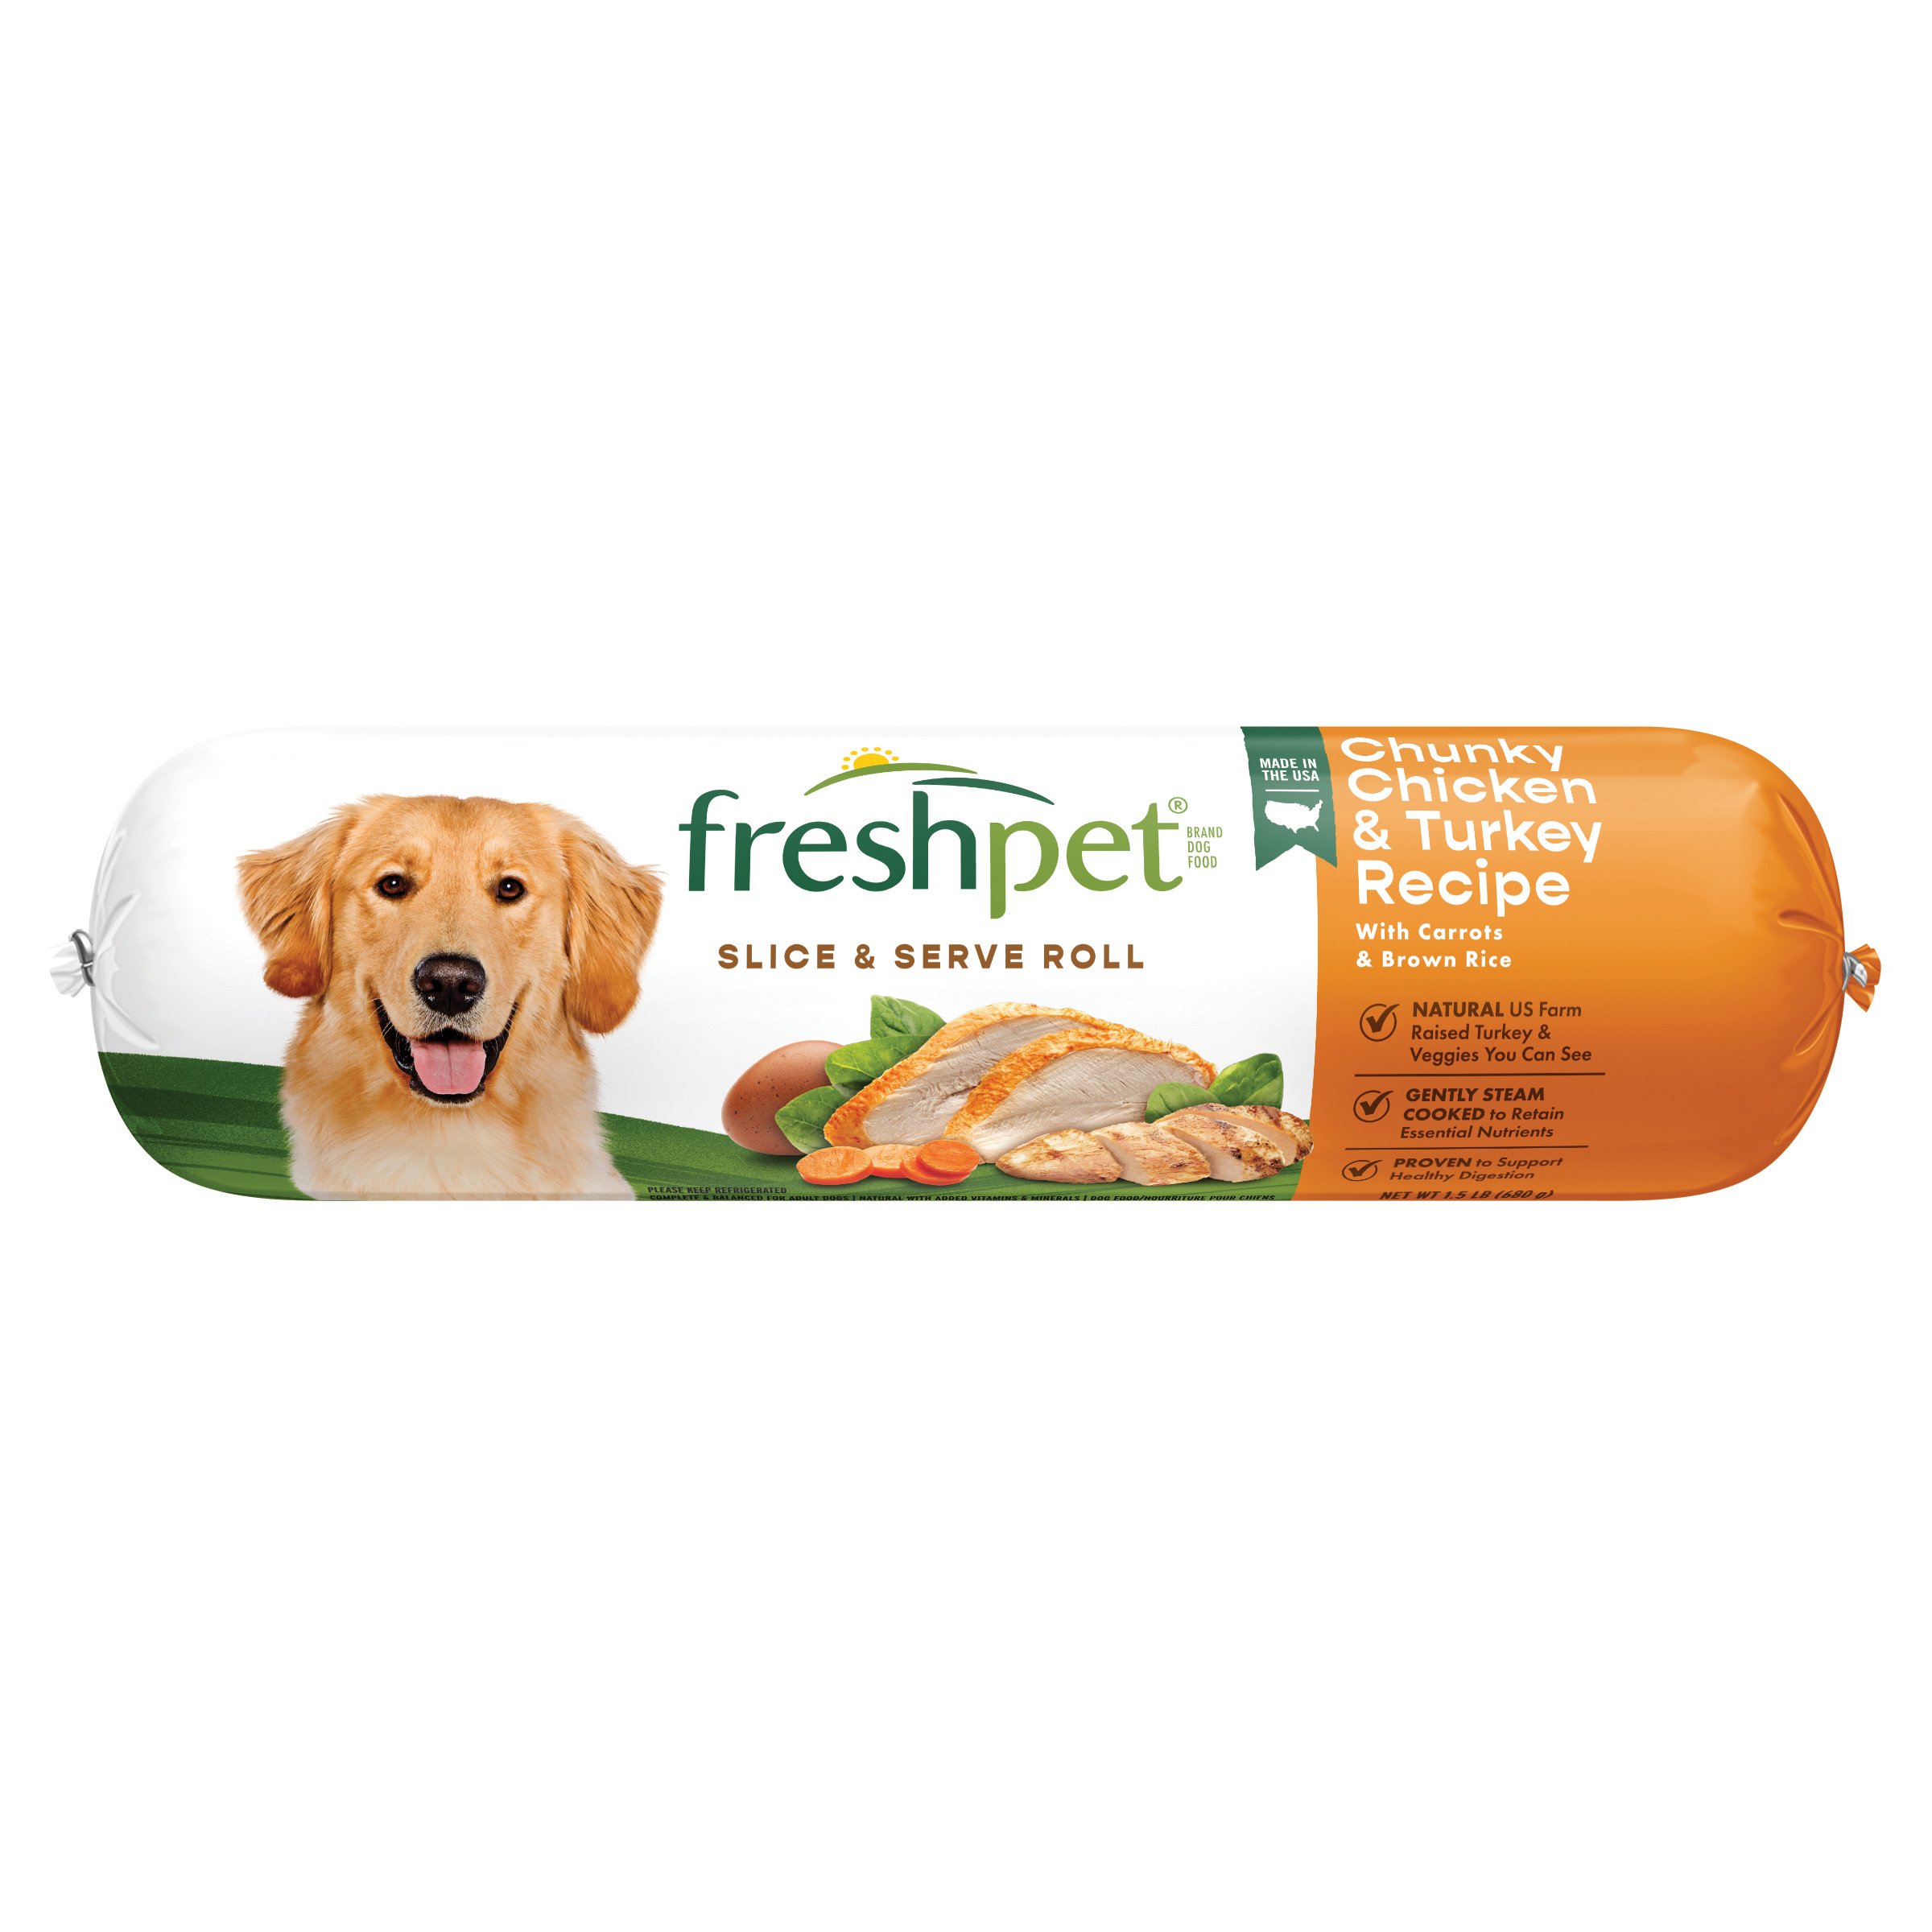 refrigerated dog food